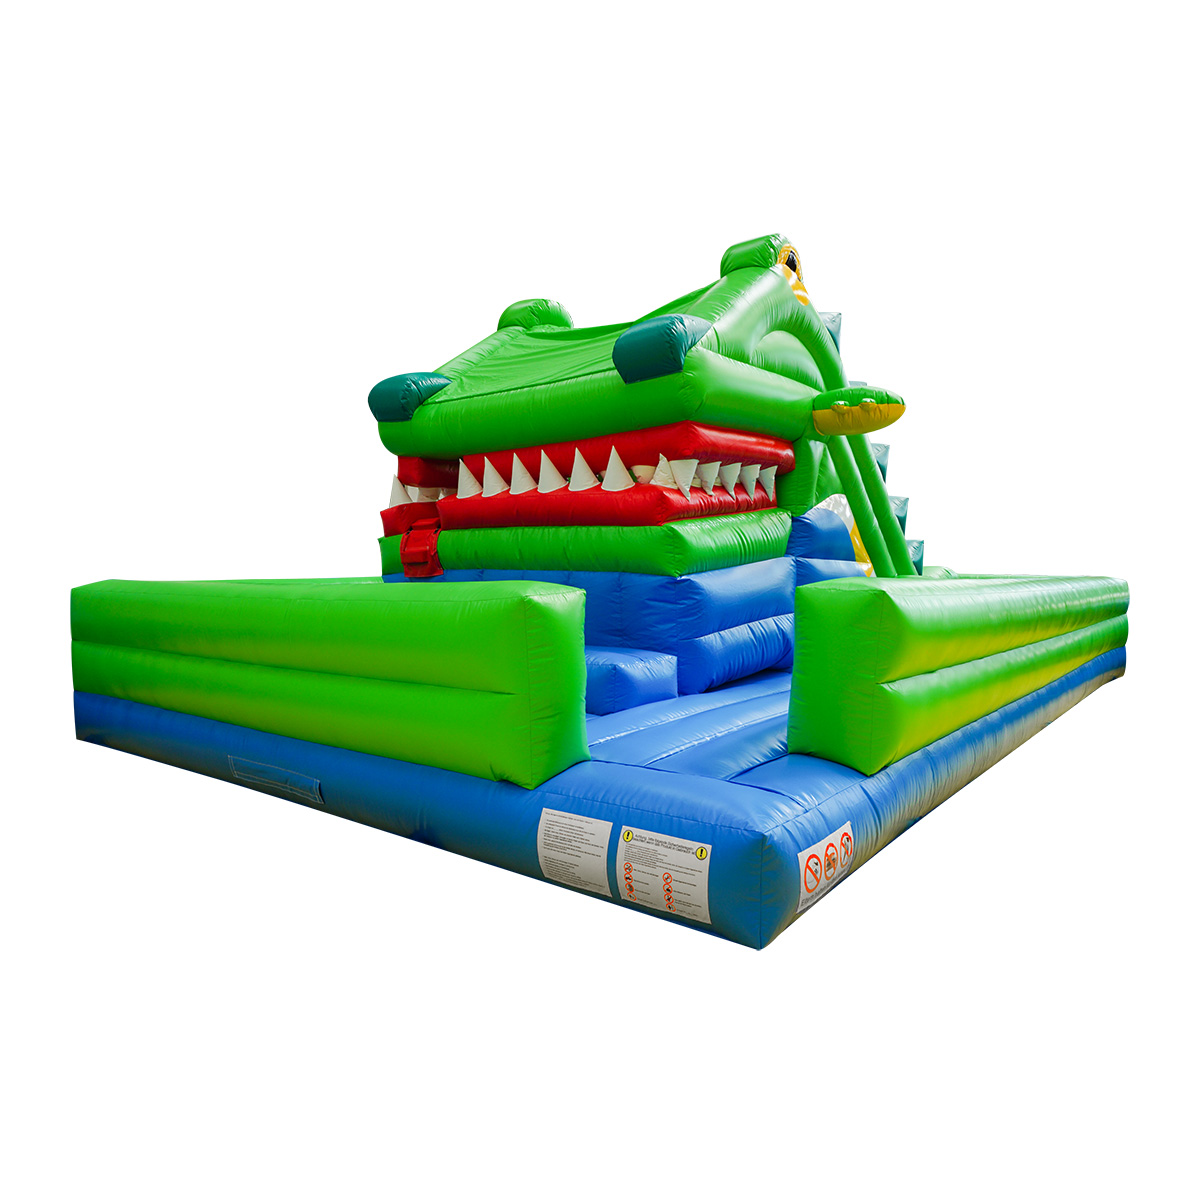 Crocodile bouncy castle slideYG-99